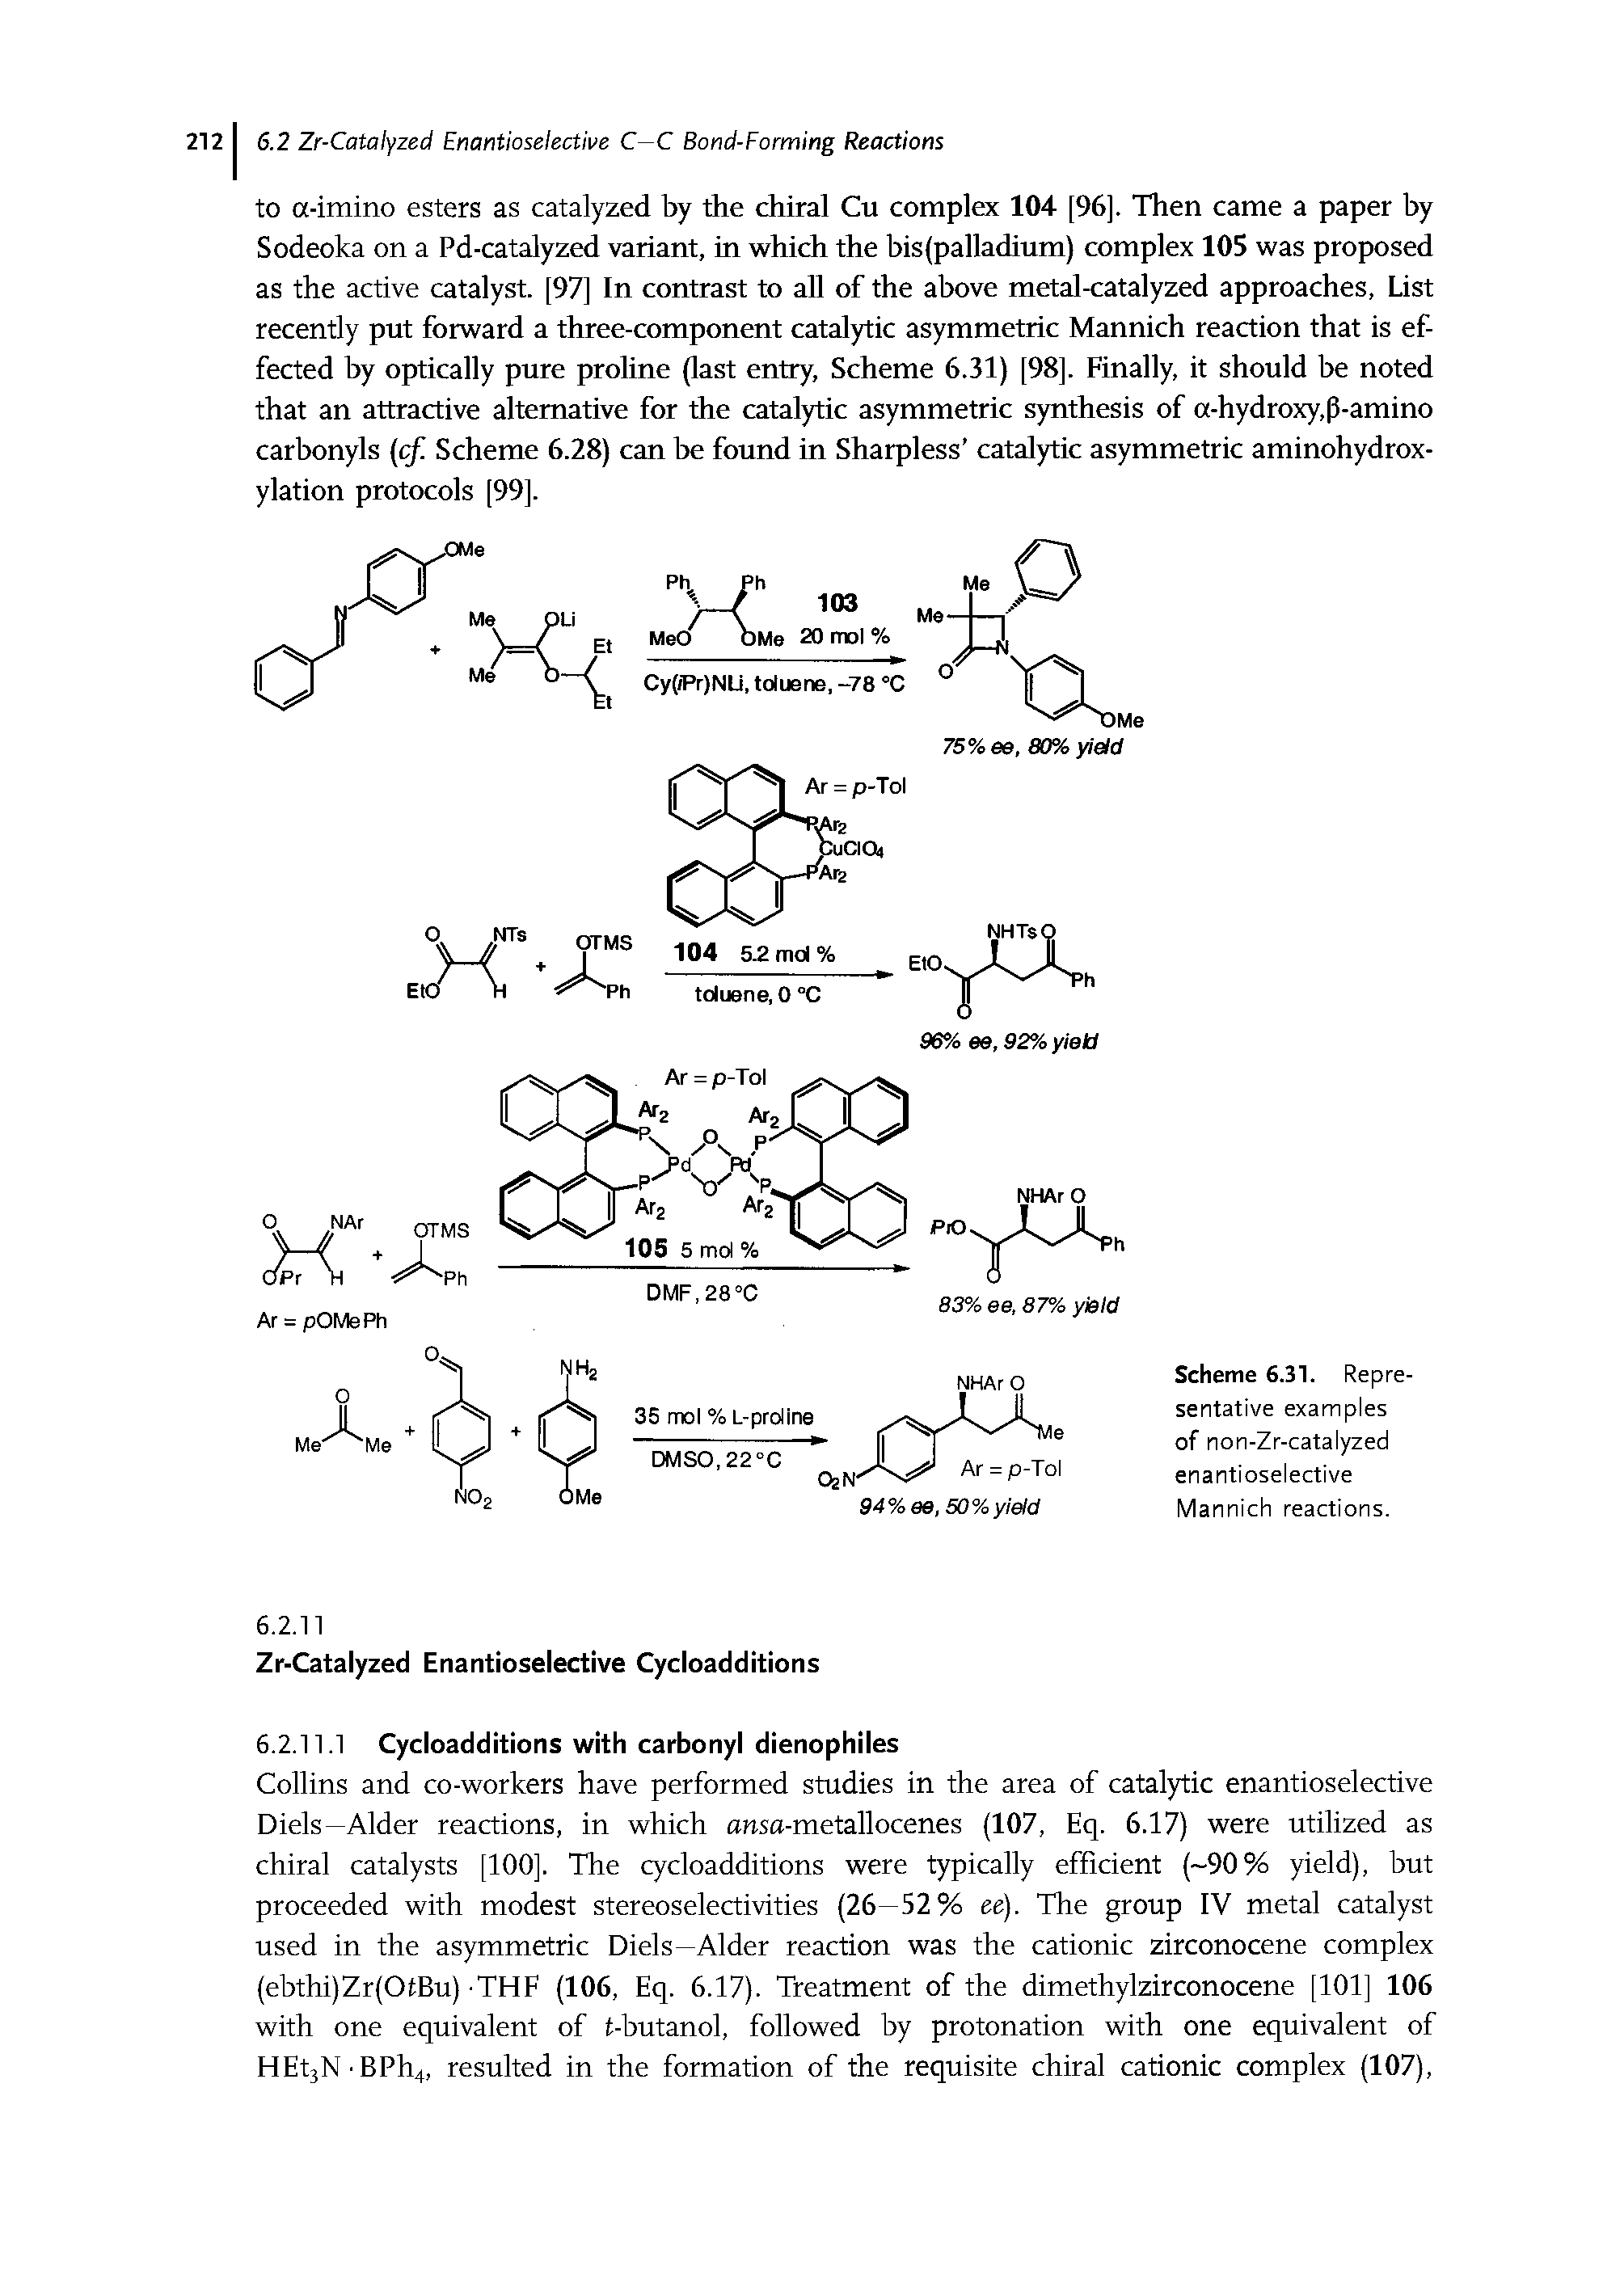 Scheme 6.31. Representative examples of non-Zr-catalyzed enantioselective Mannich reactions.